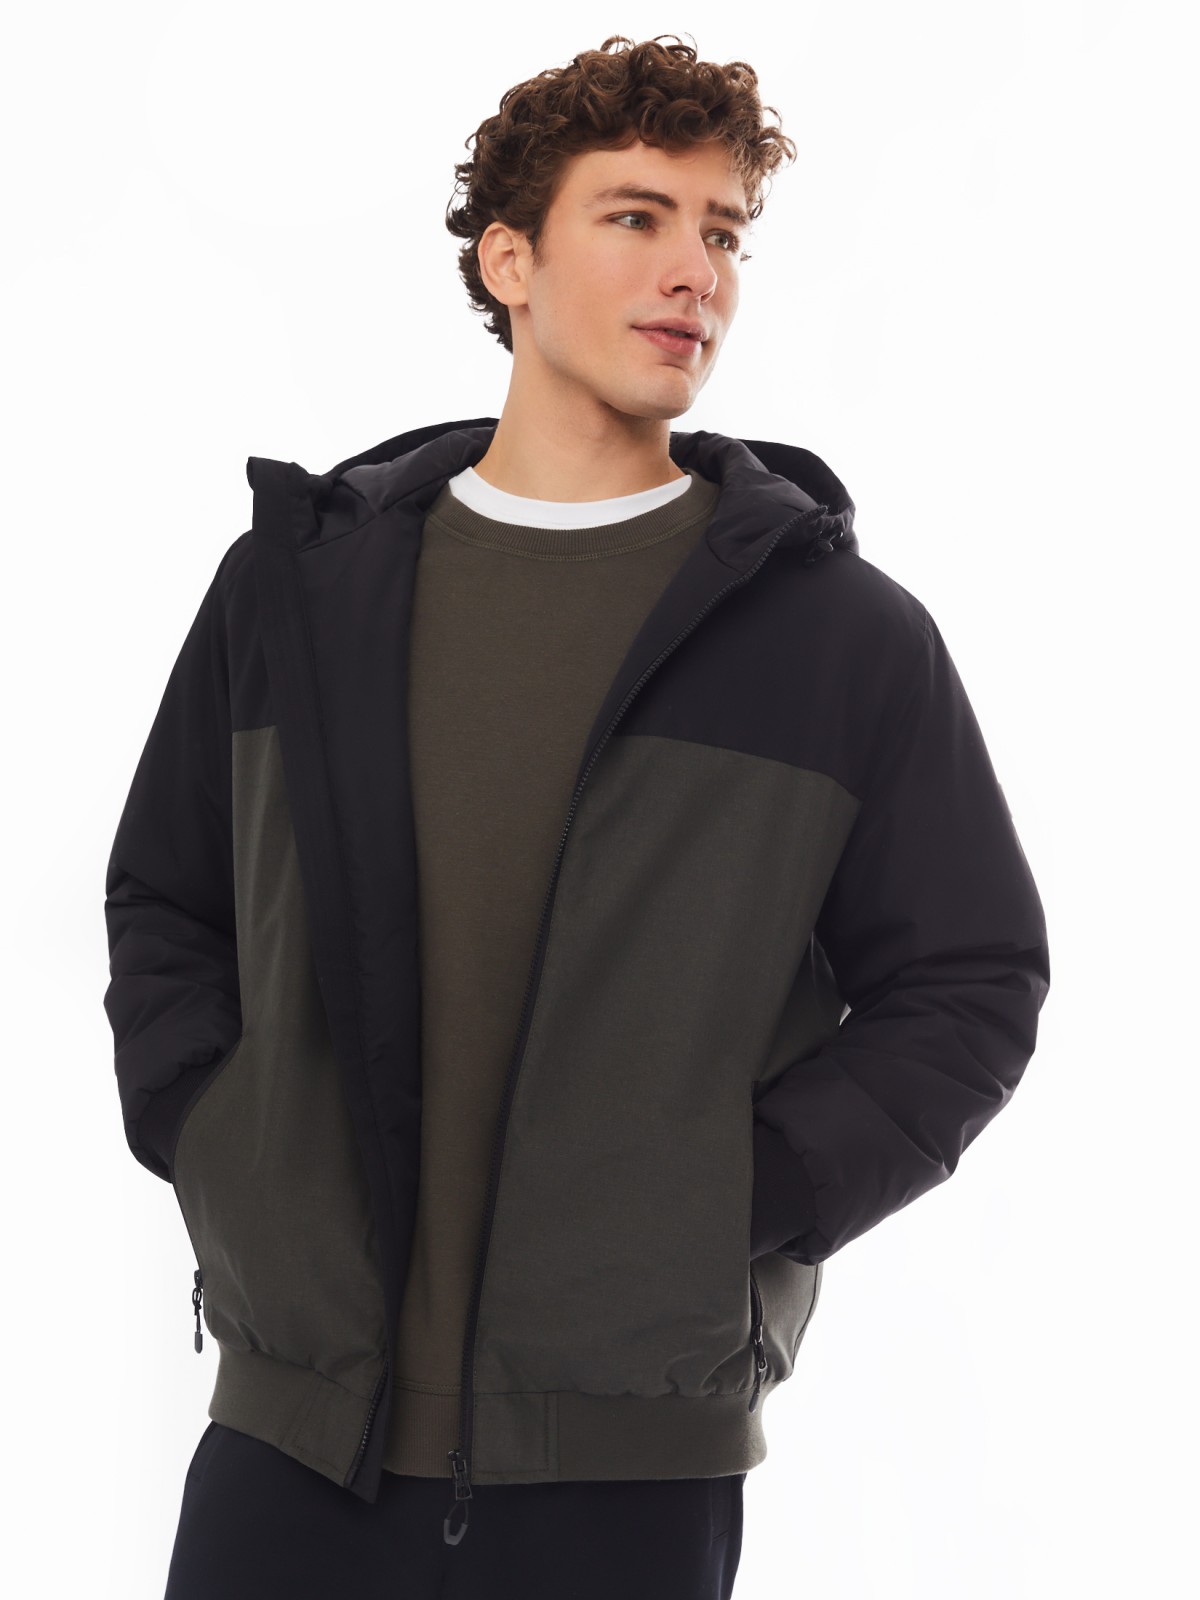 Утеплённая куртка-бомбер на синтепоне с капюшоном zolla 01412510L034, цвет хаки, размер M